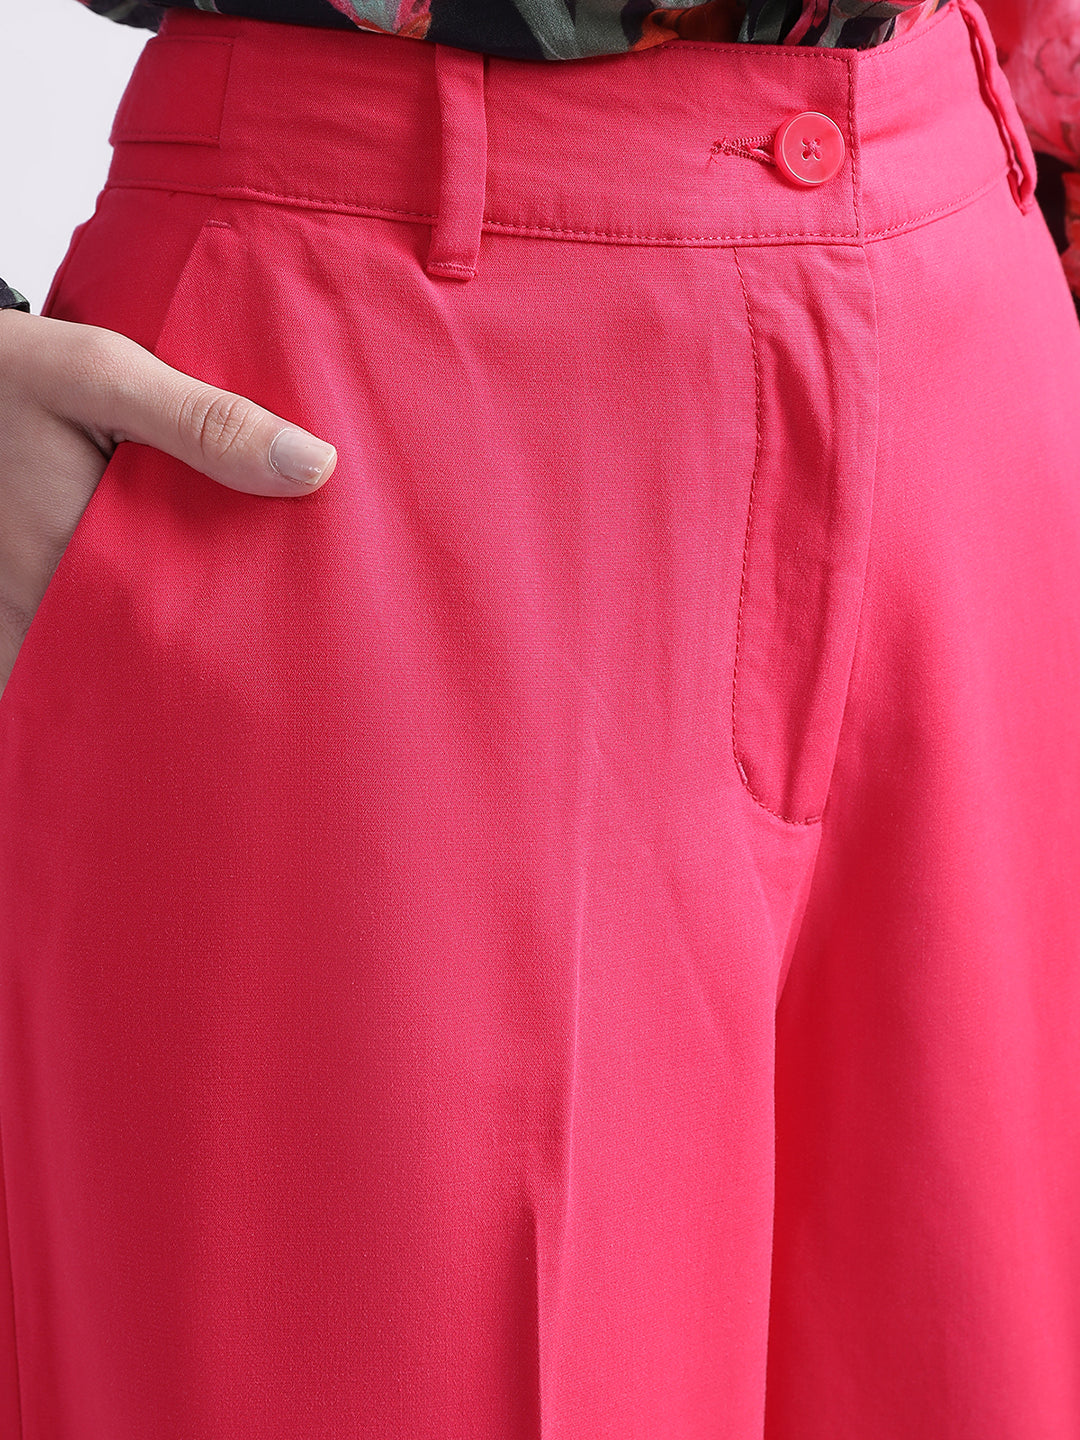 Buy Pink Wide-Leg Pants Online - Label Ritu Kumar International Store View